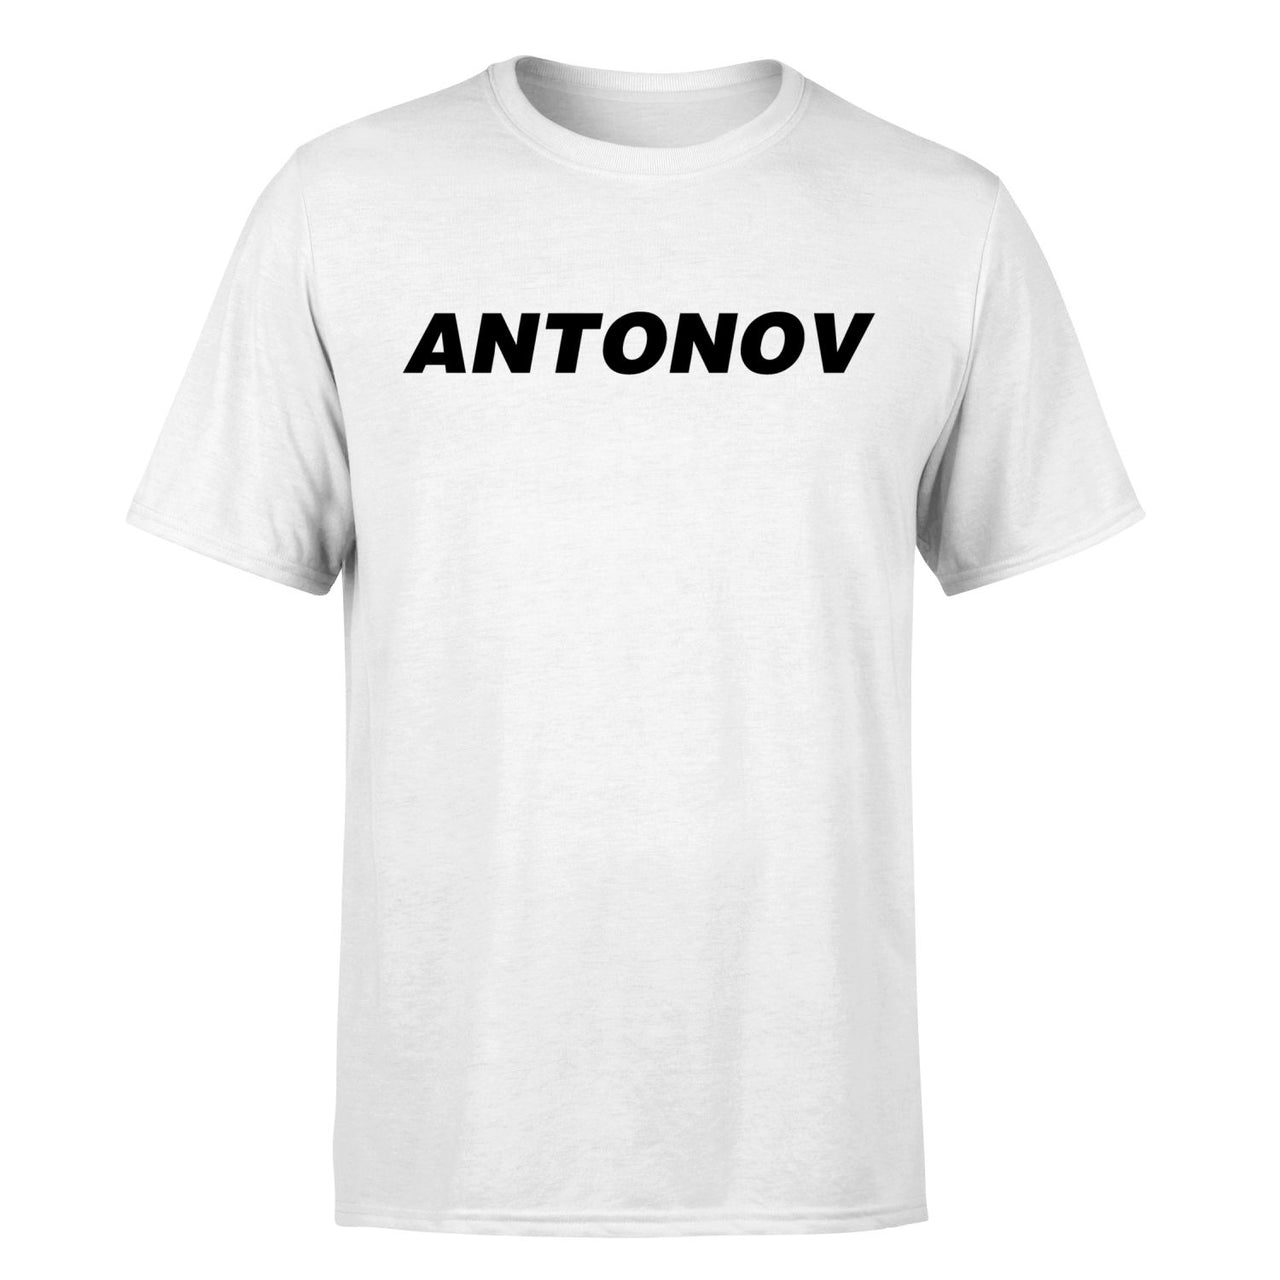 Antonov & Text Designed T-Shirts